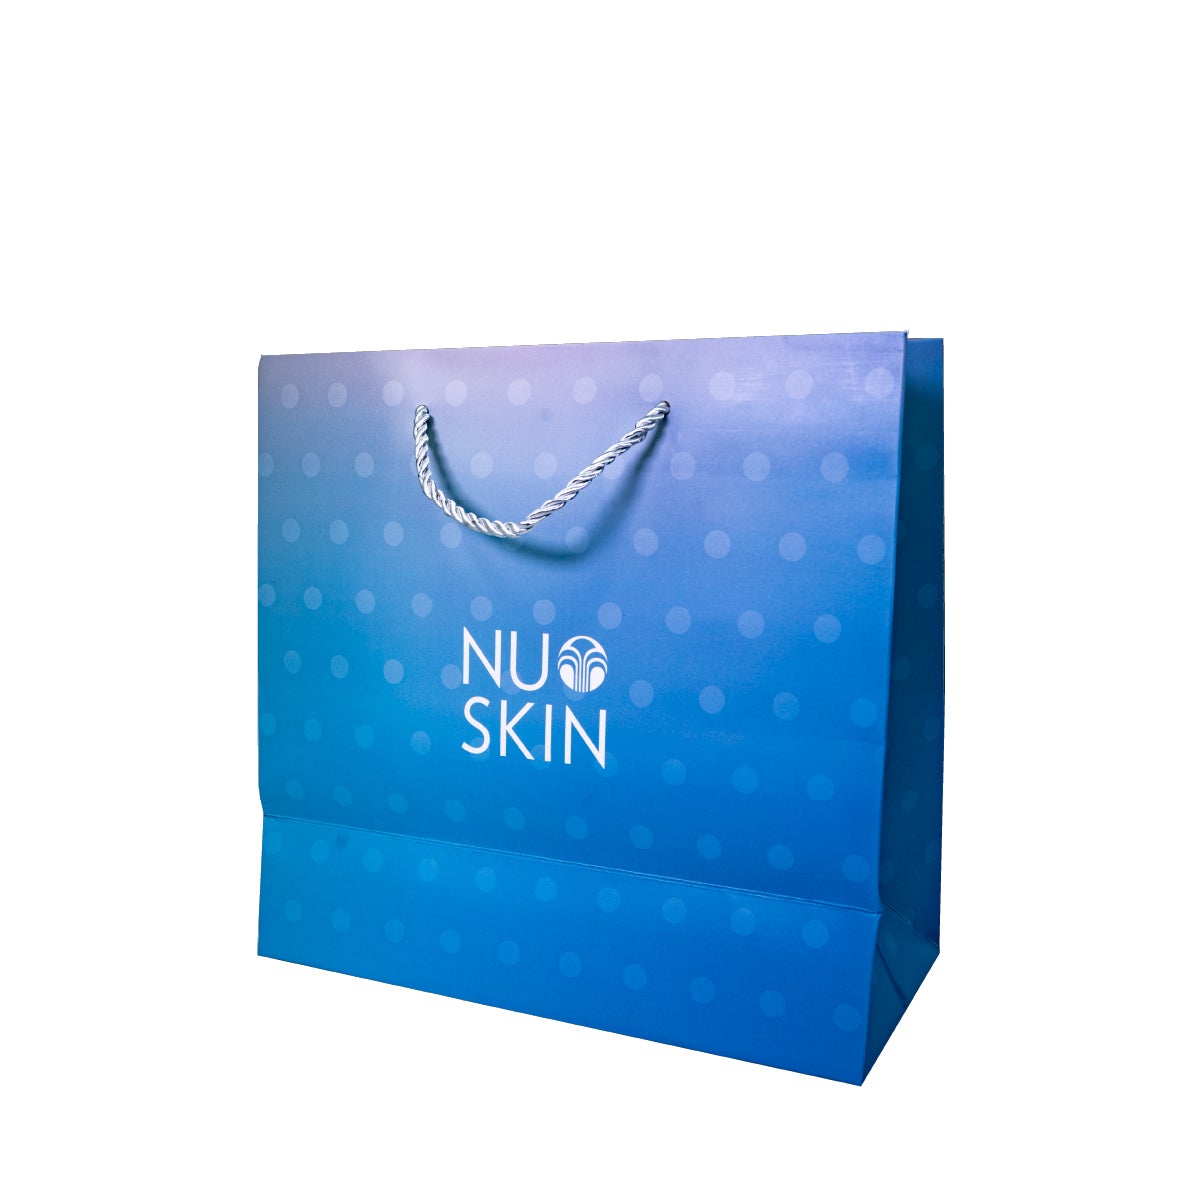 Nu Skin Other Sales Aid